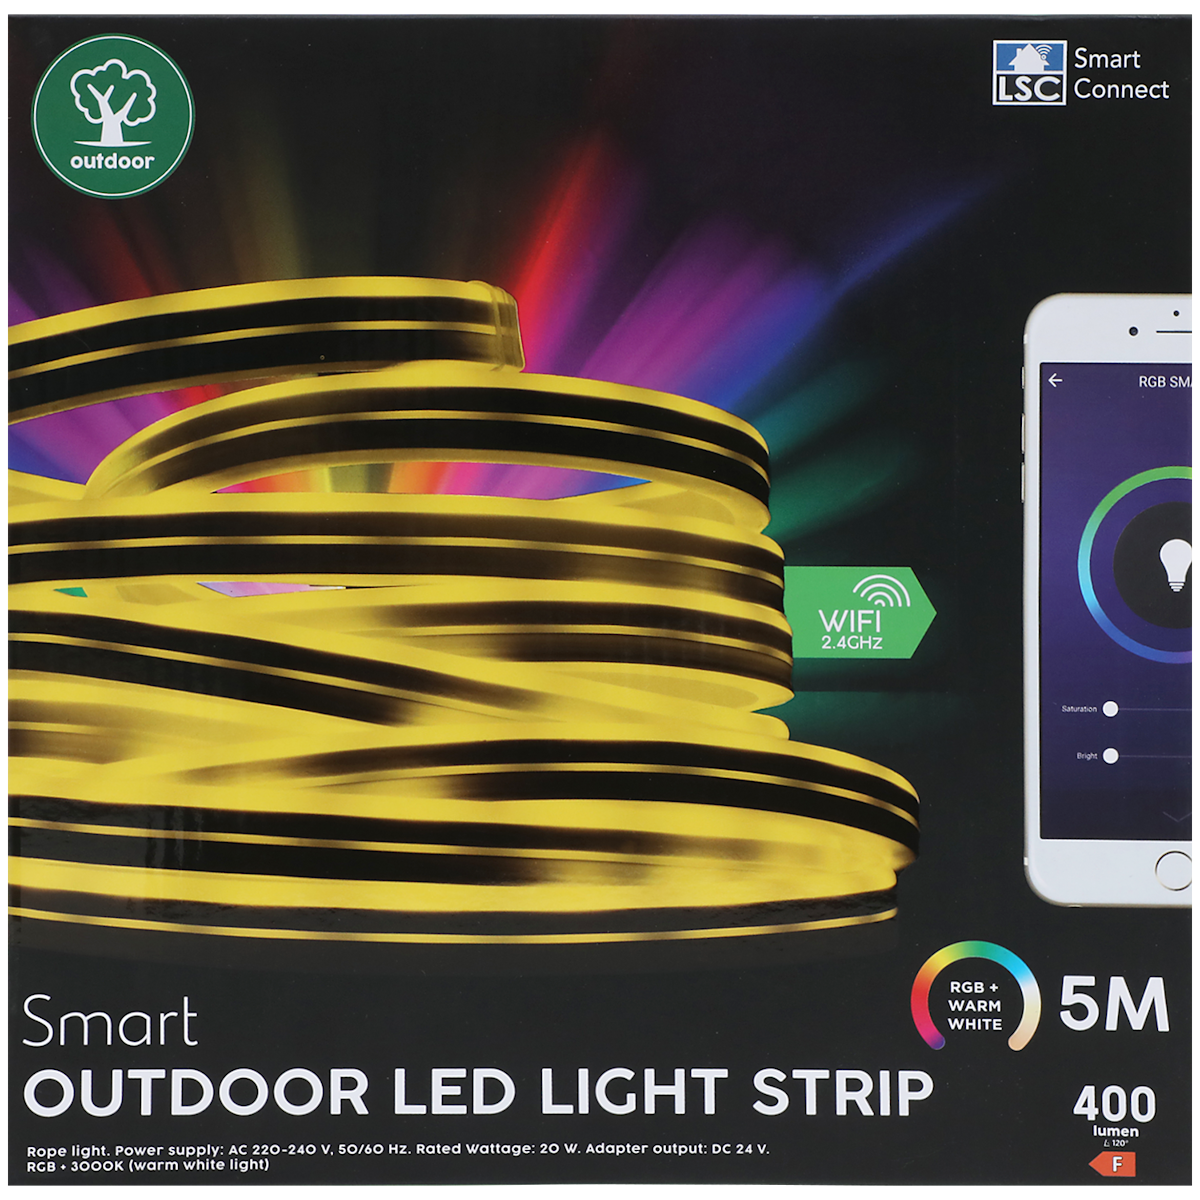 LSC Smart Connect outdoor ledstrip